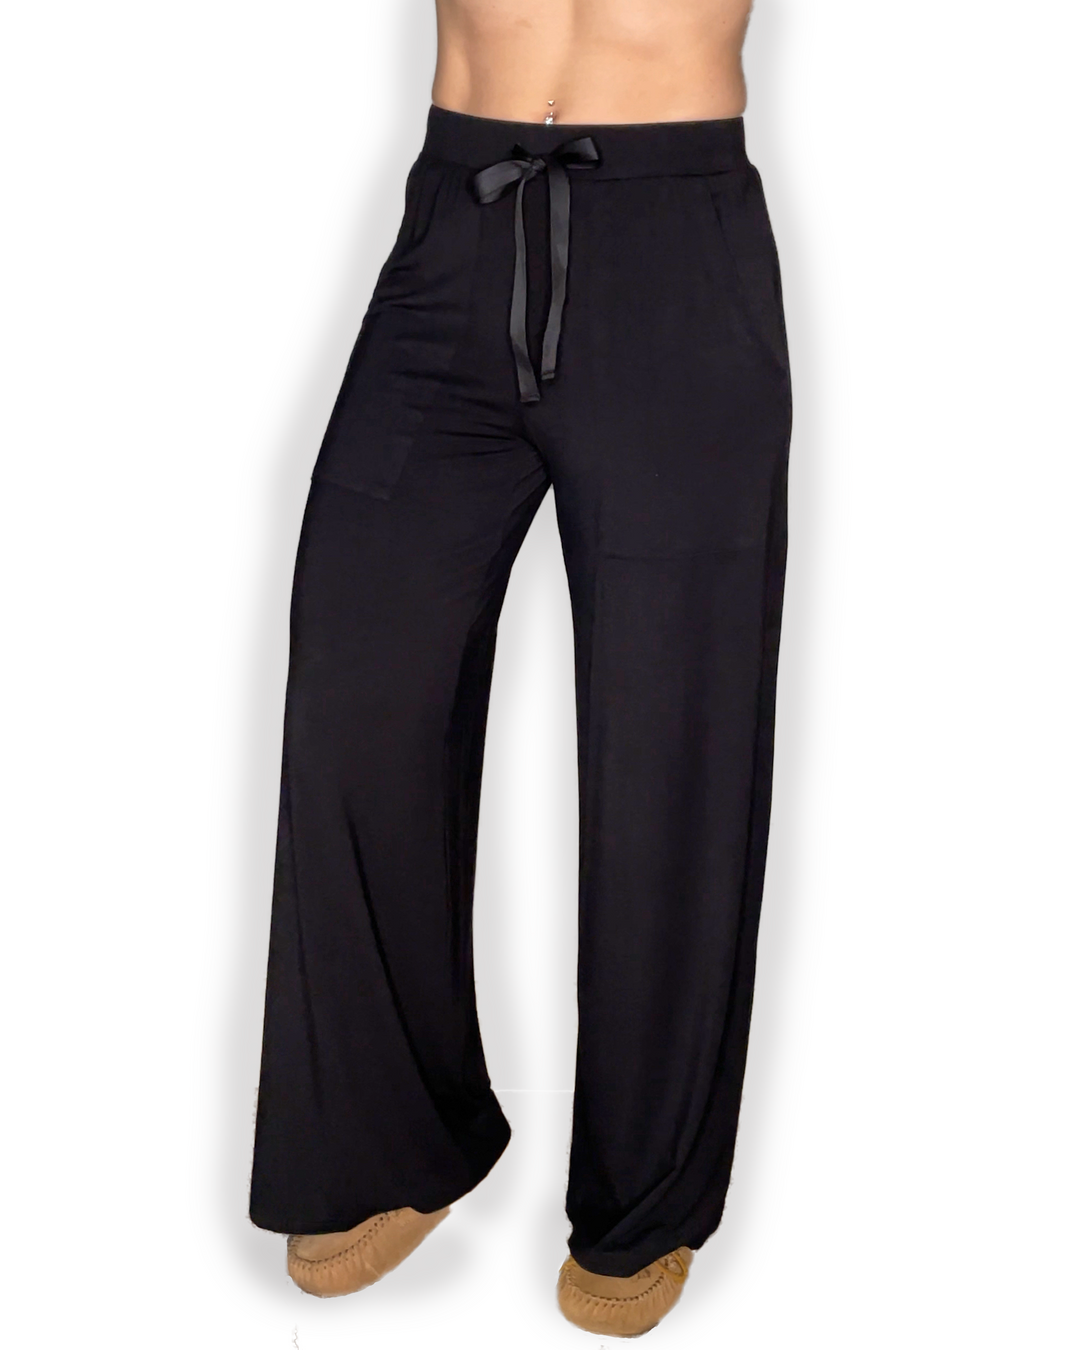 Bamboo Pocket Pants  Pants for women, Yoga pants with pockets, Bamboo yoga  pants